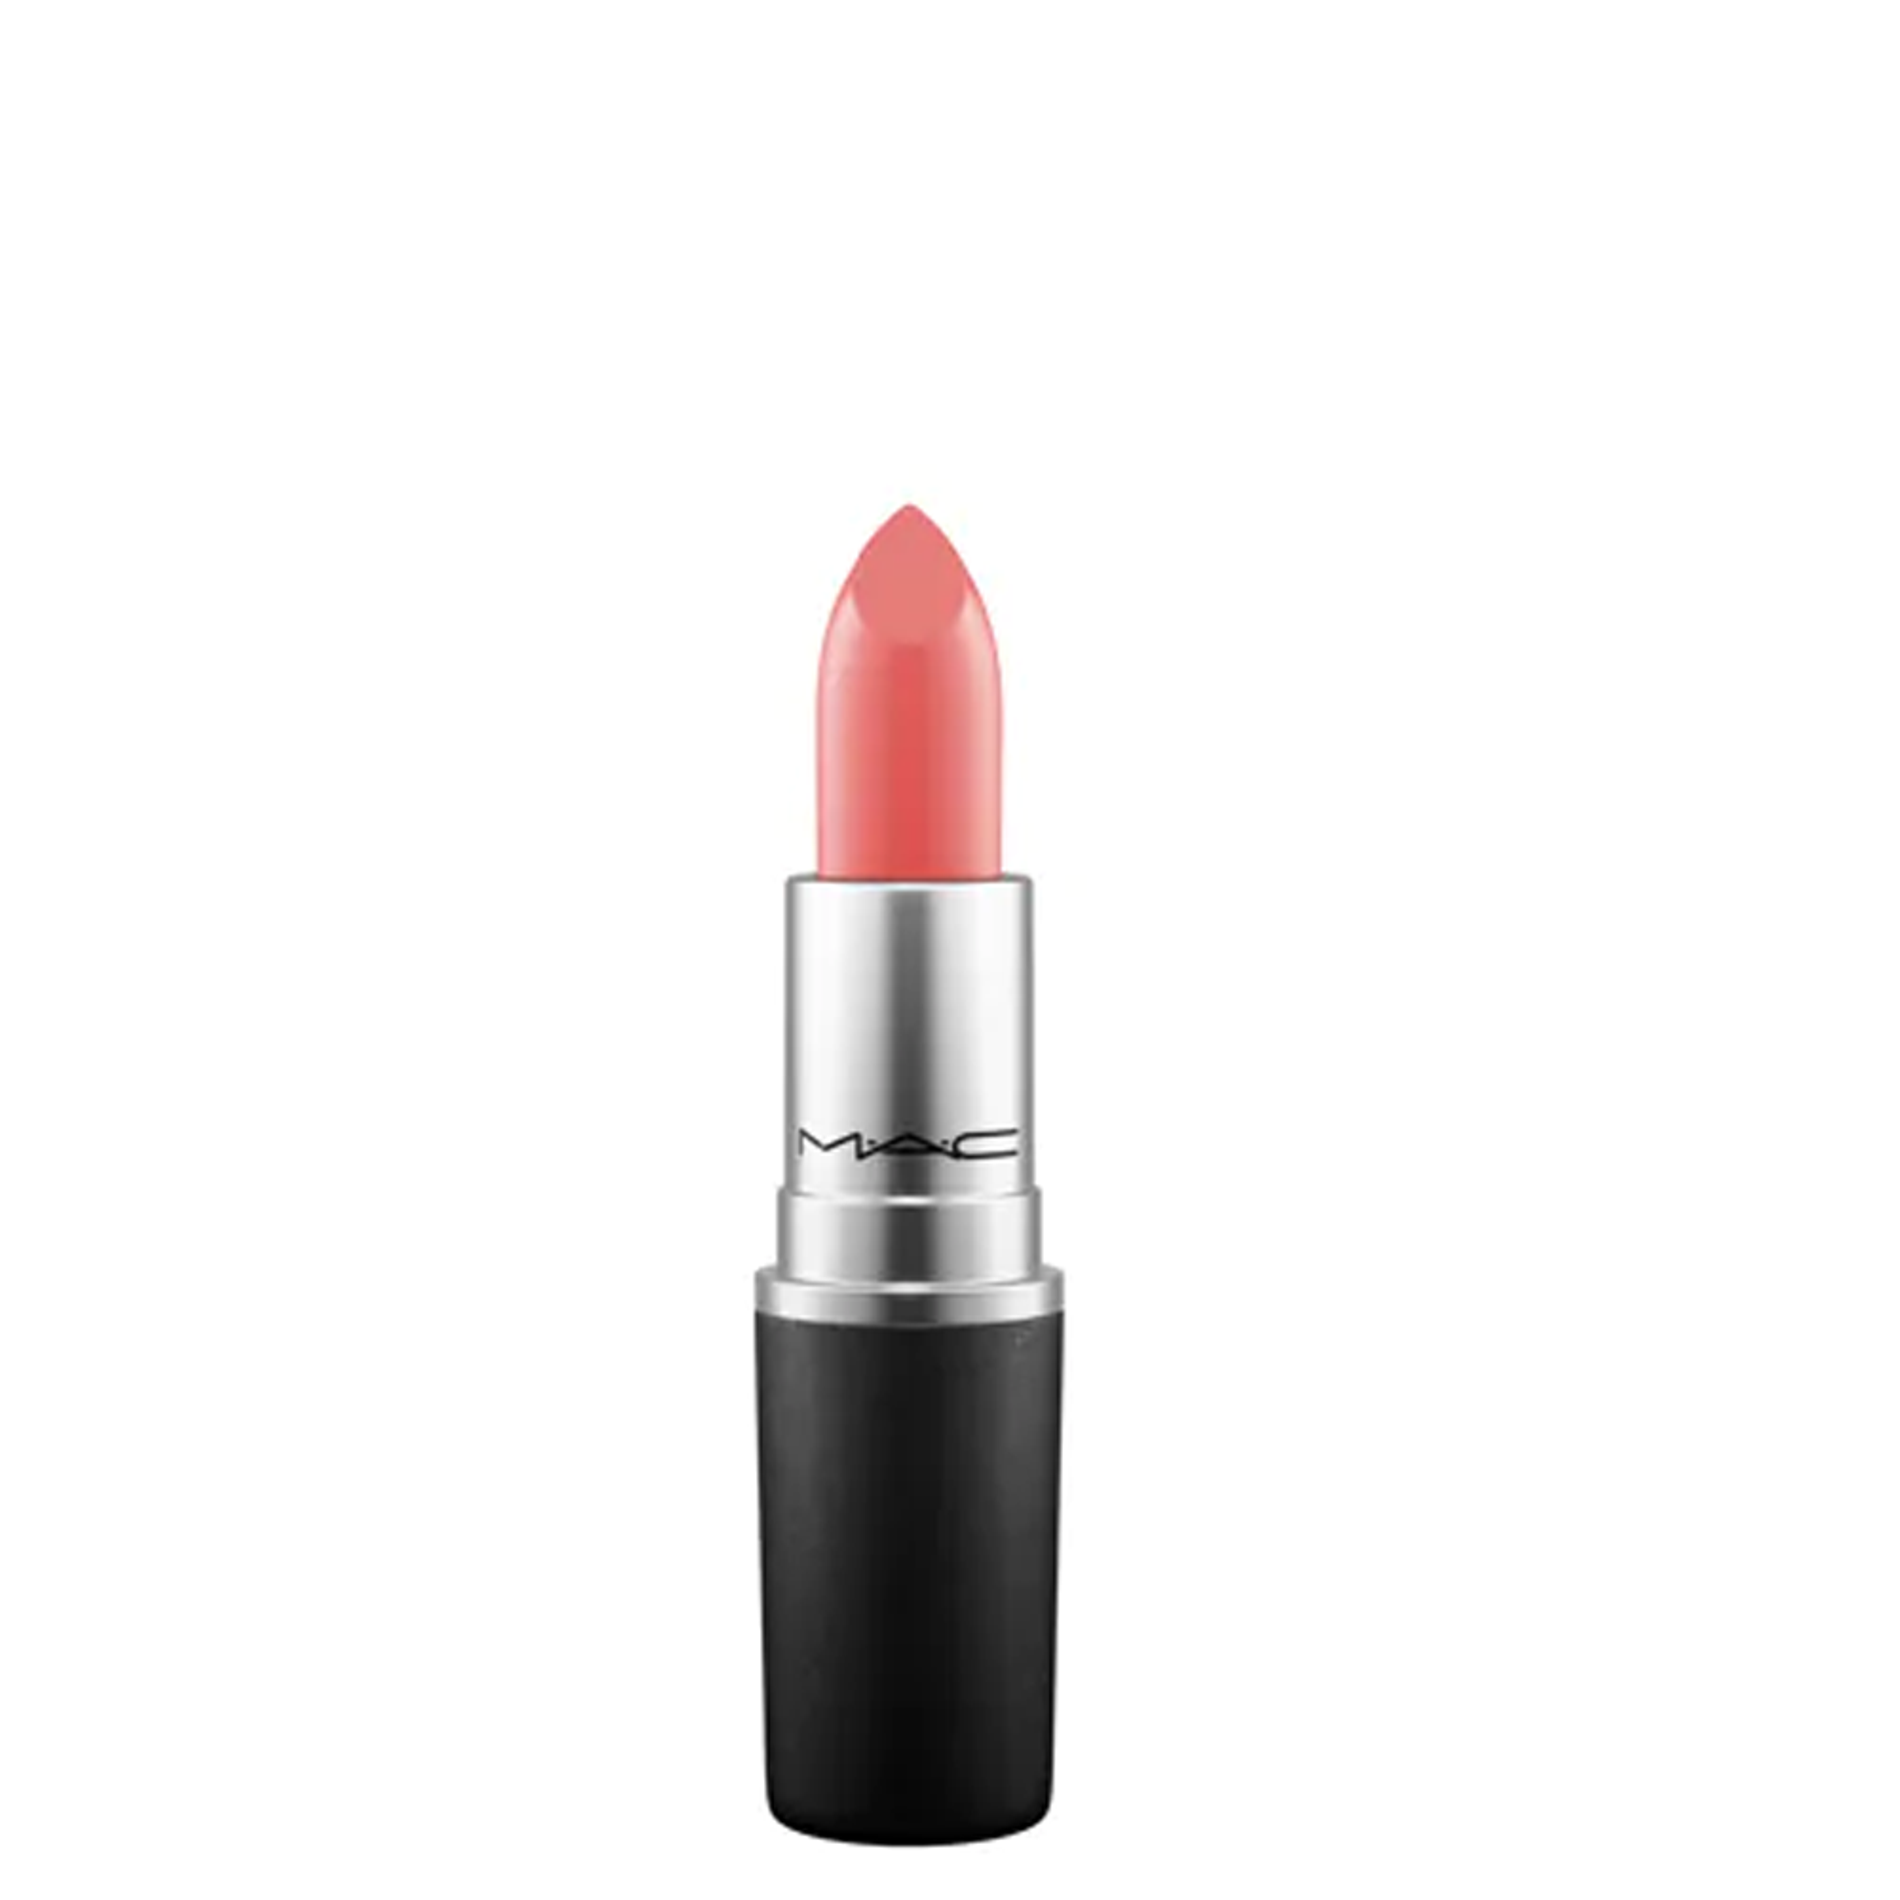 son-thoi-mac-lustre-lipstick-3g-13